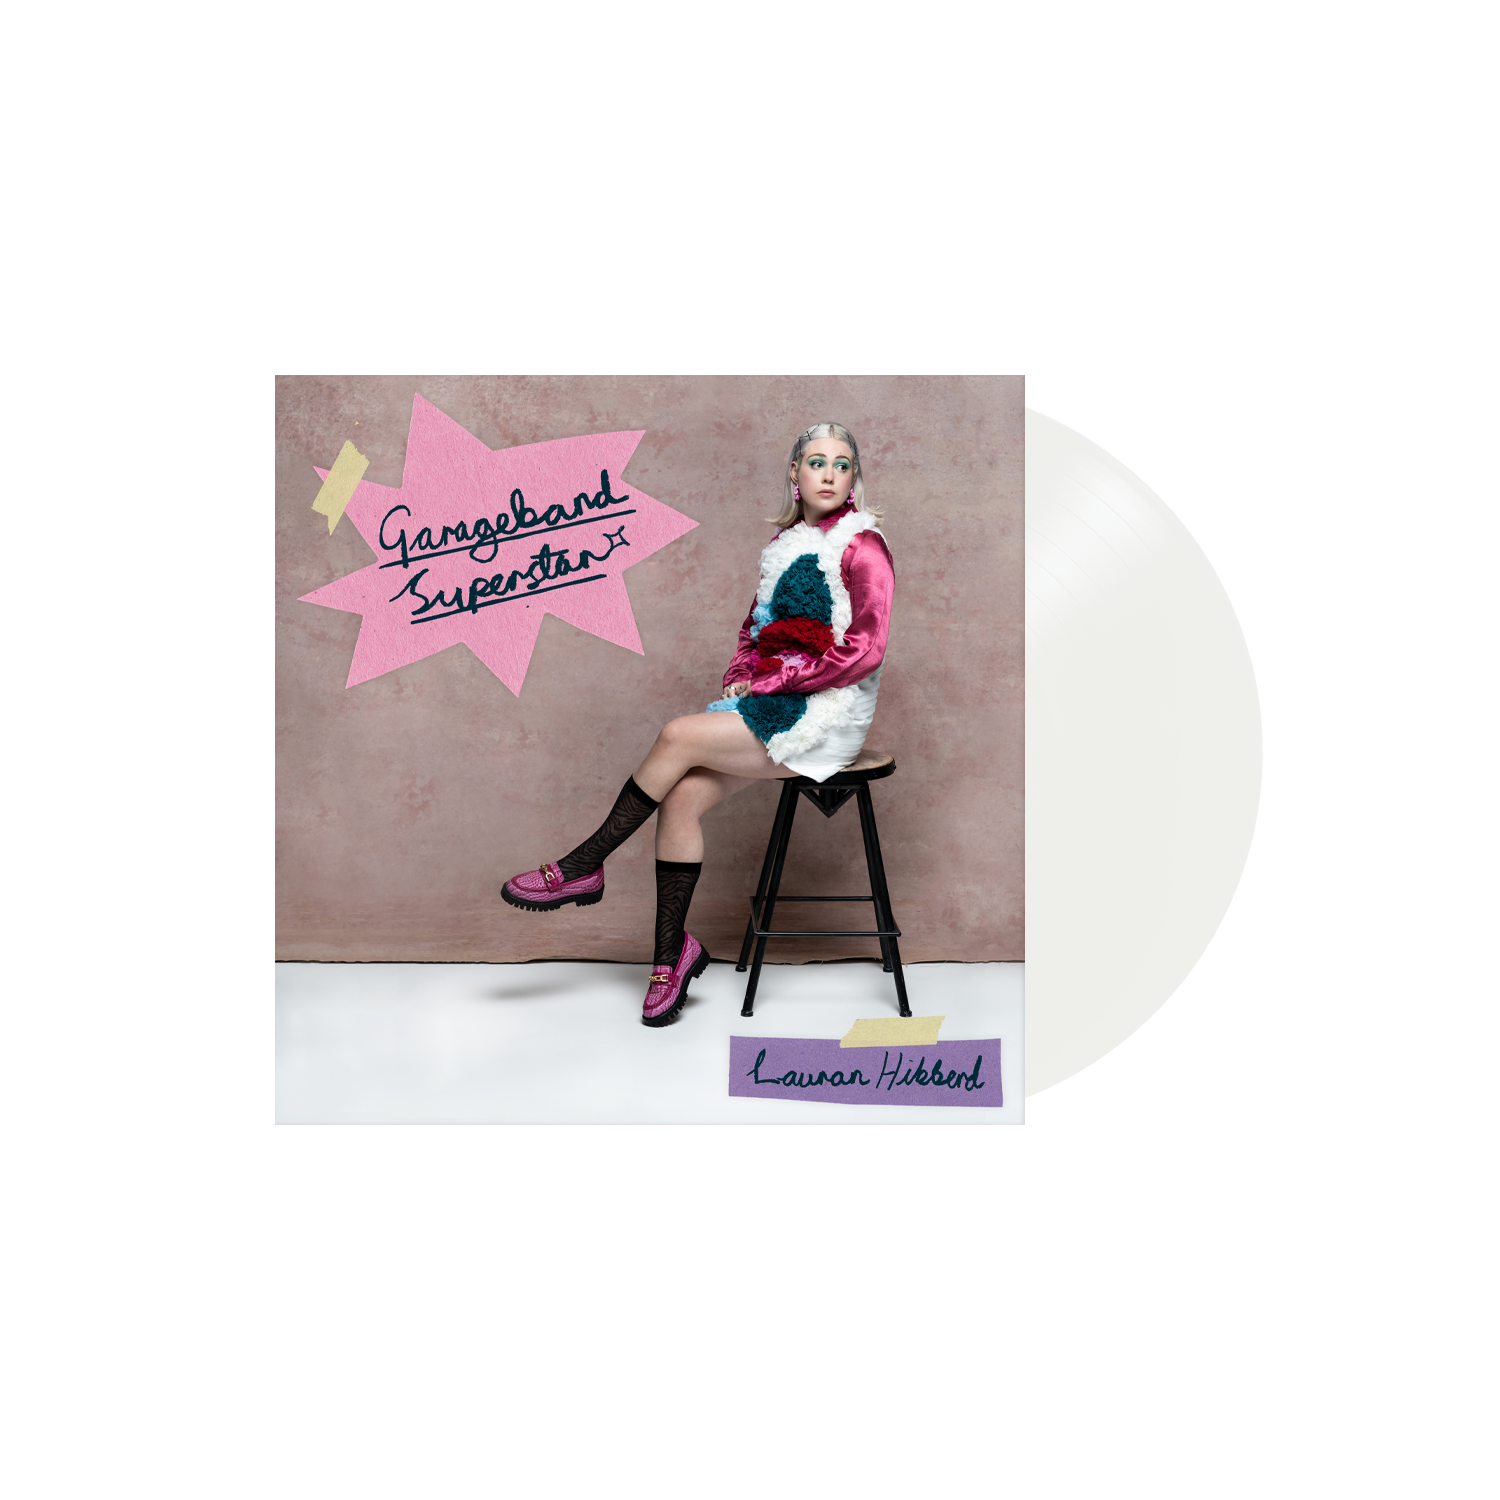 Lauran Hibberd - Garageband Superstar: Artist Store Exclusive Opaque White Vinyl LP